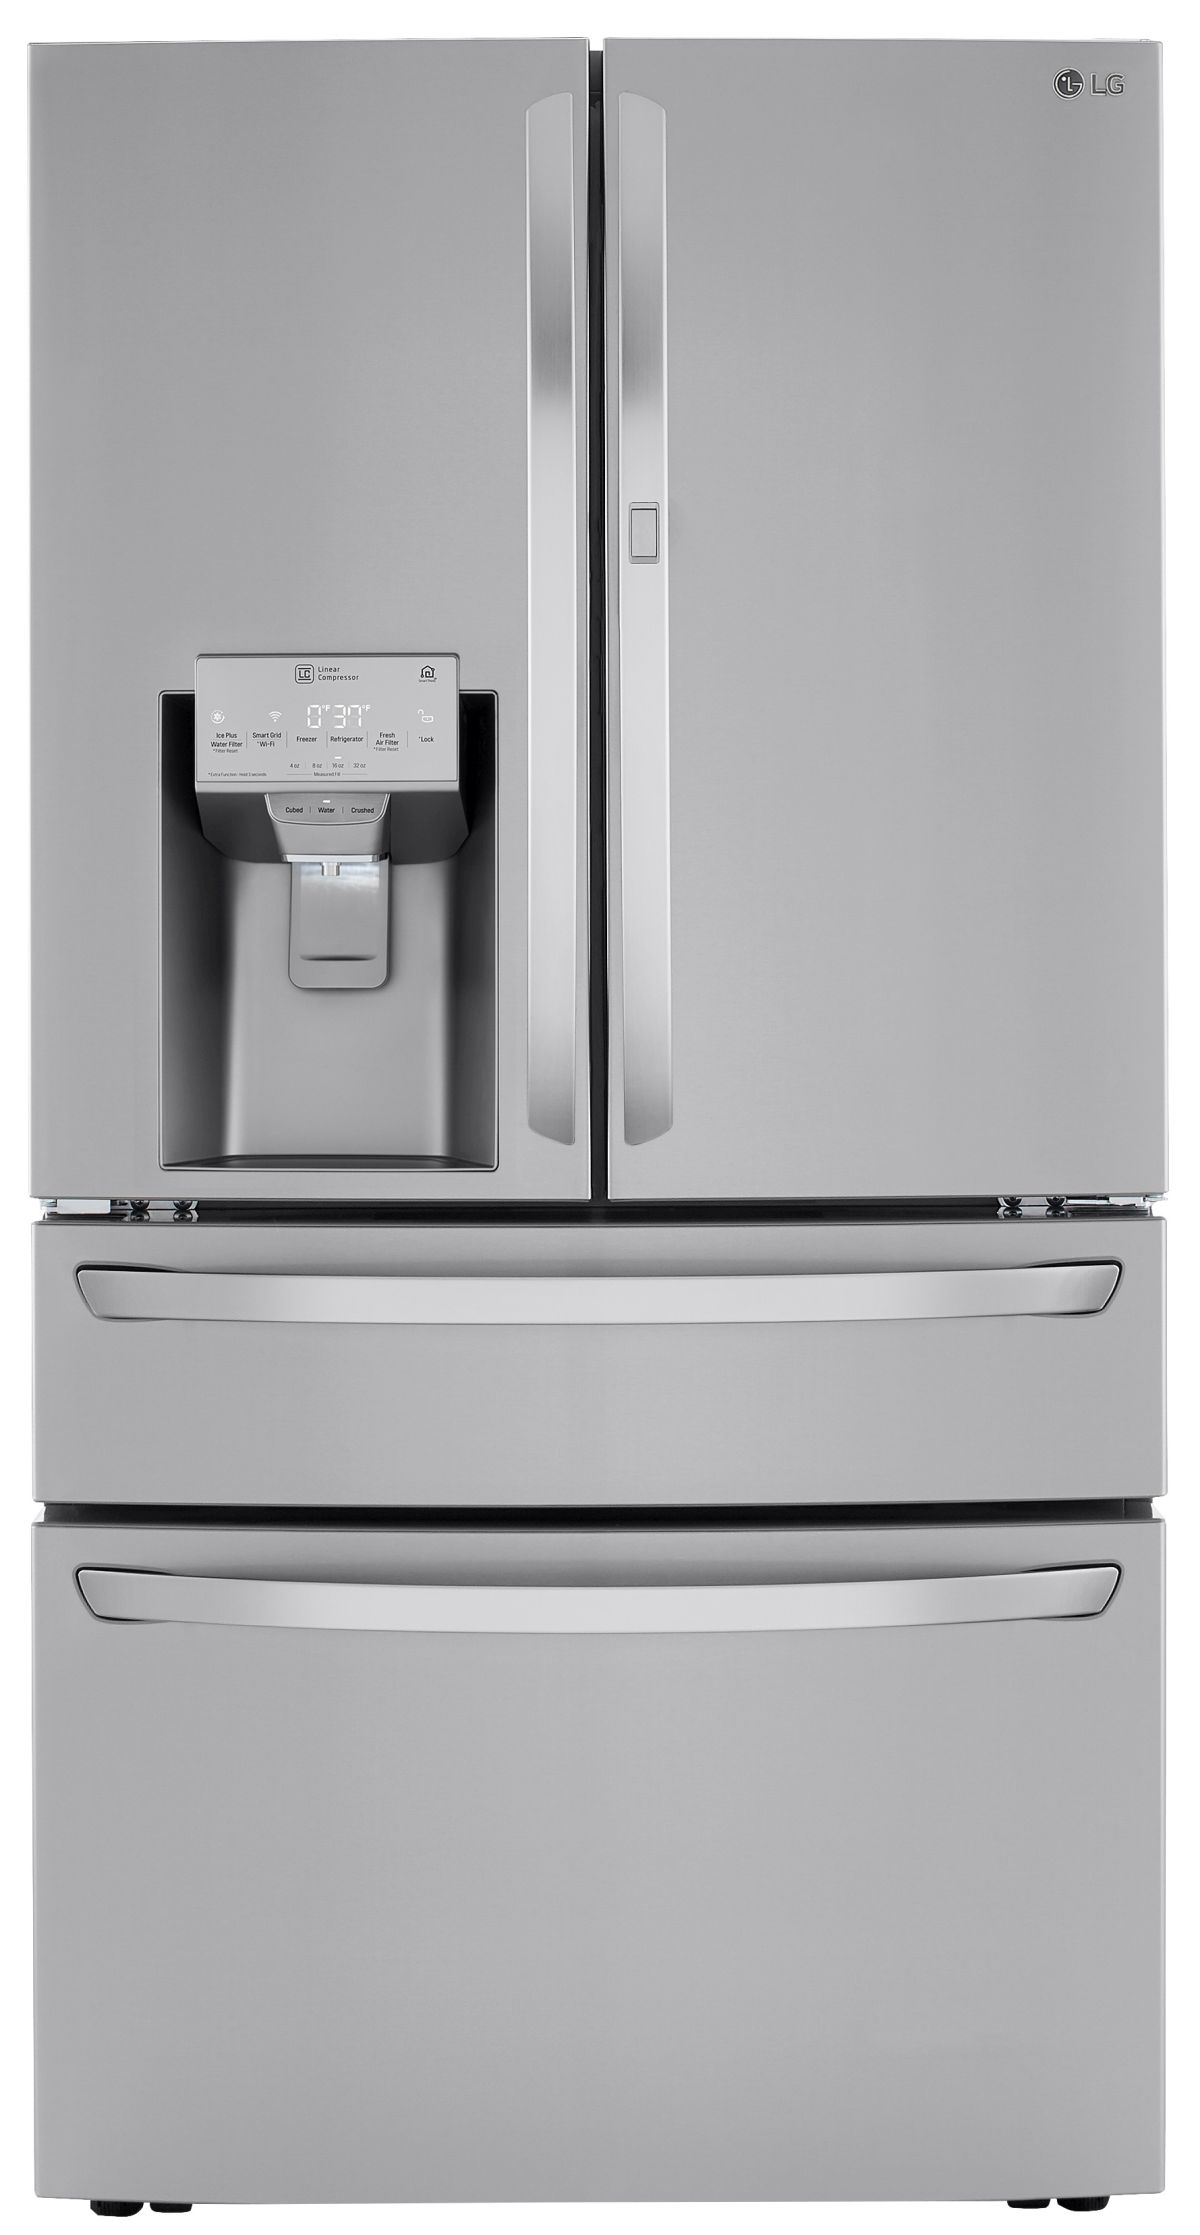 LG large refrigerator